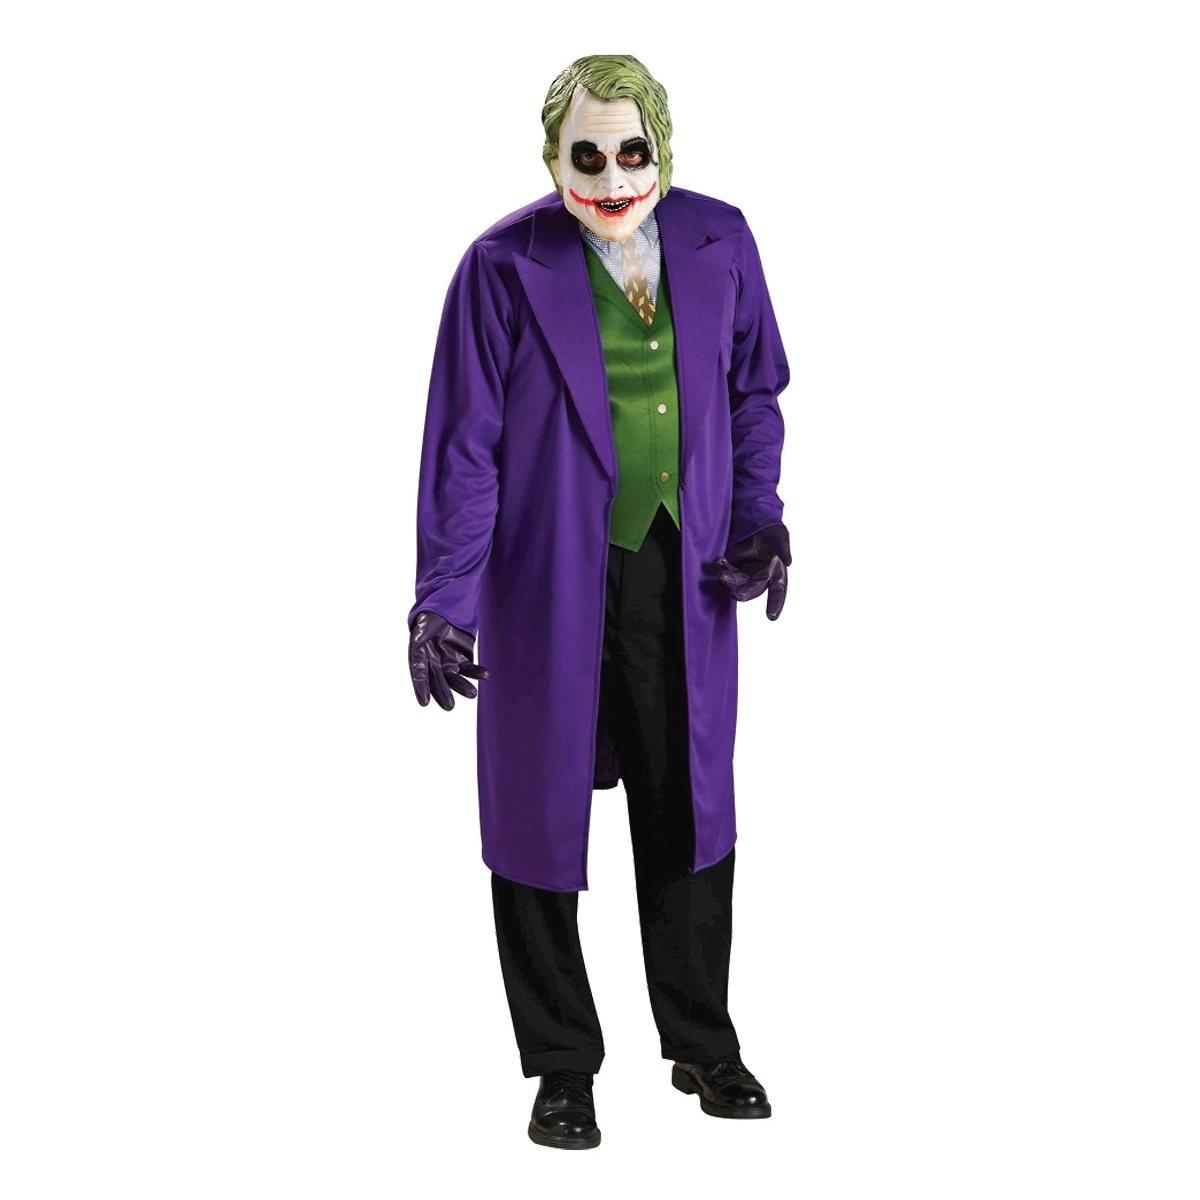 Costume Carnevale Joker Assassino: Acquista Online su M2Store.it